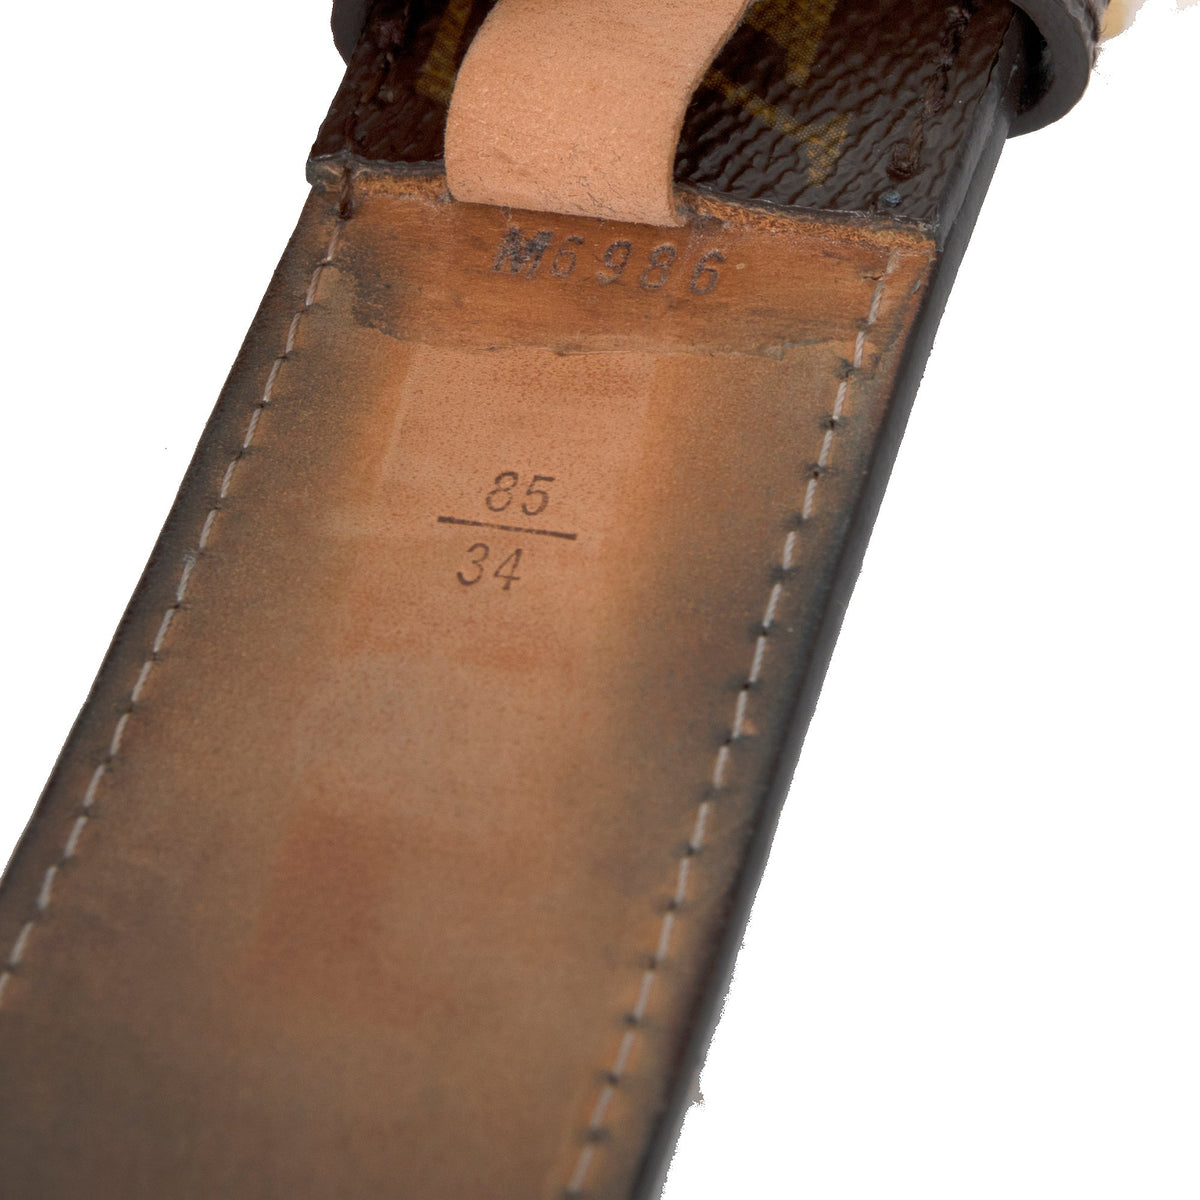 Louis Vuitton Signature 35mm Belt